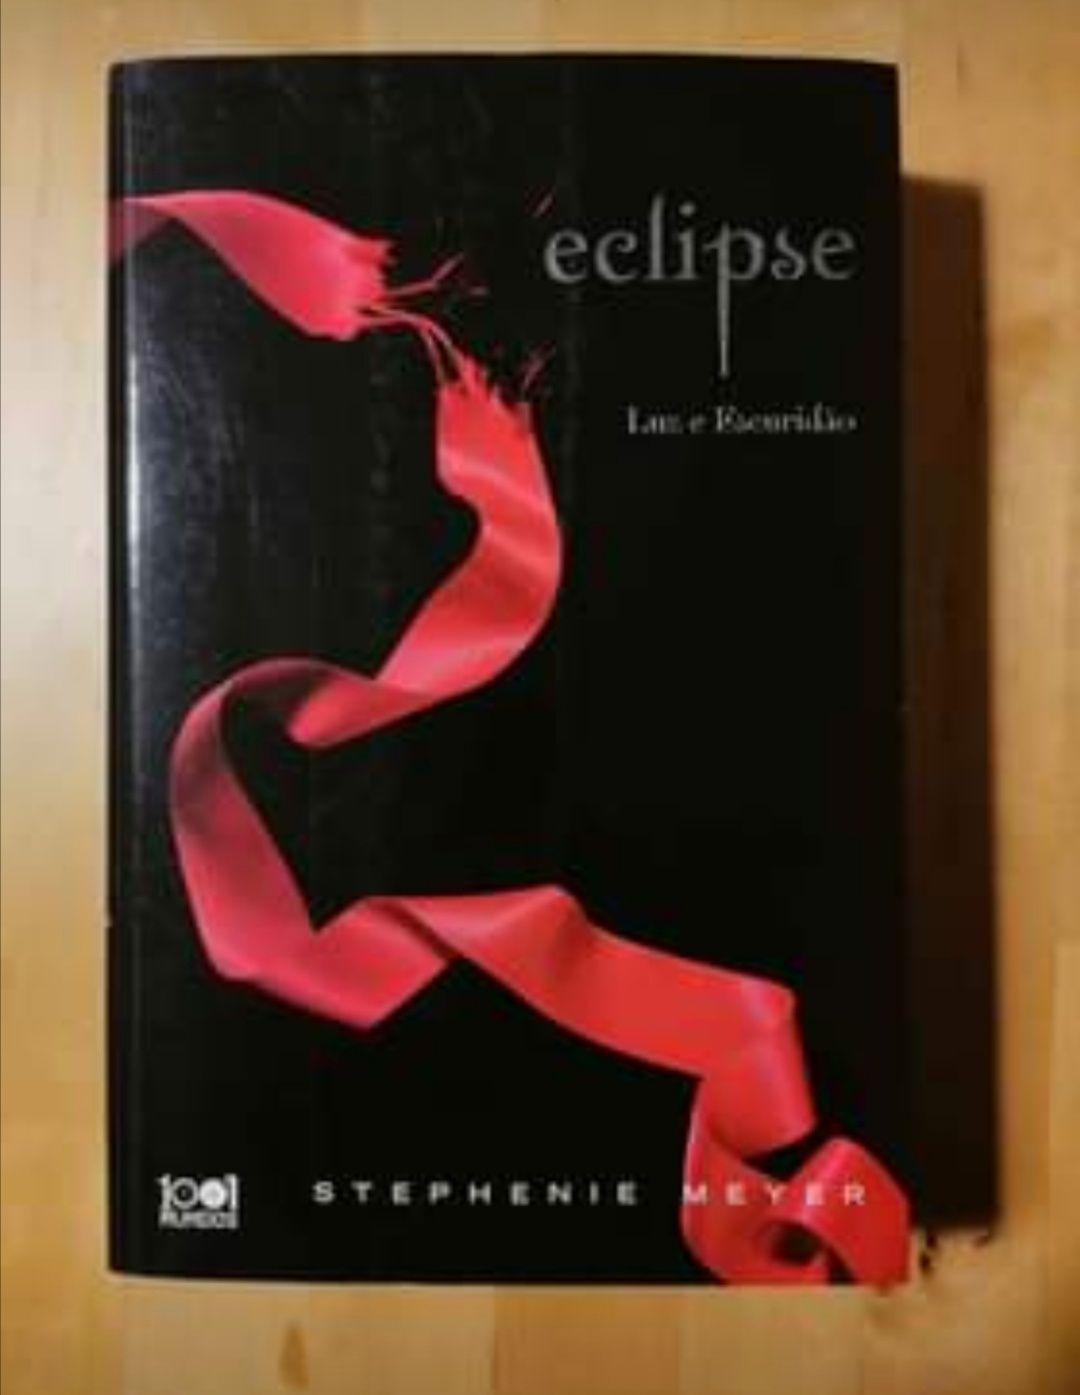 Livro Eclipse de Stephenie Meyer Saga crepúsculo